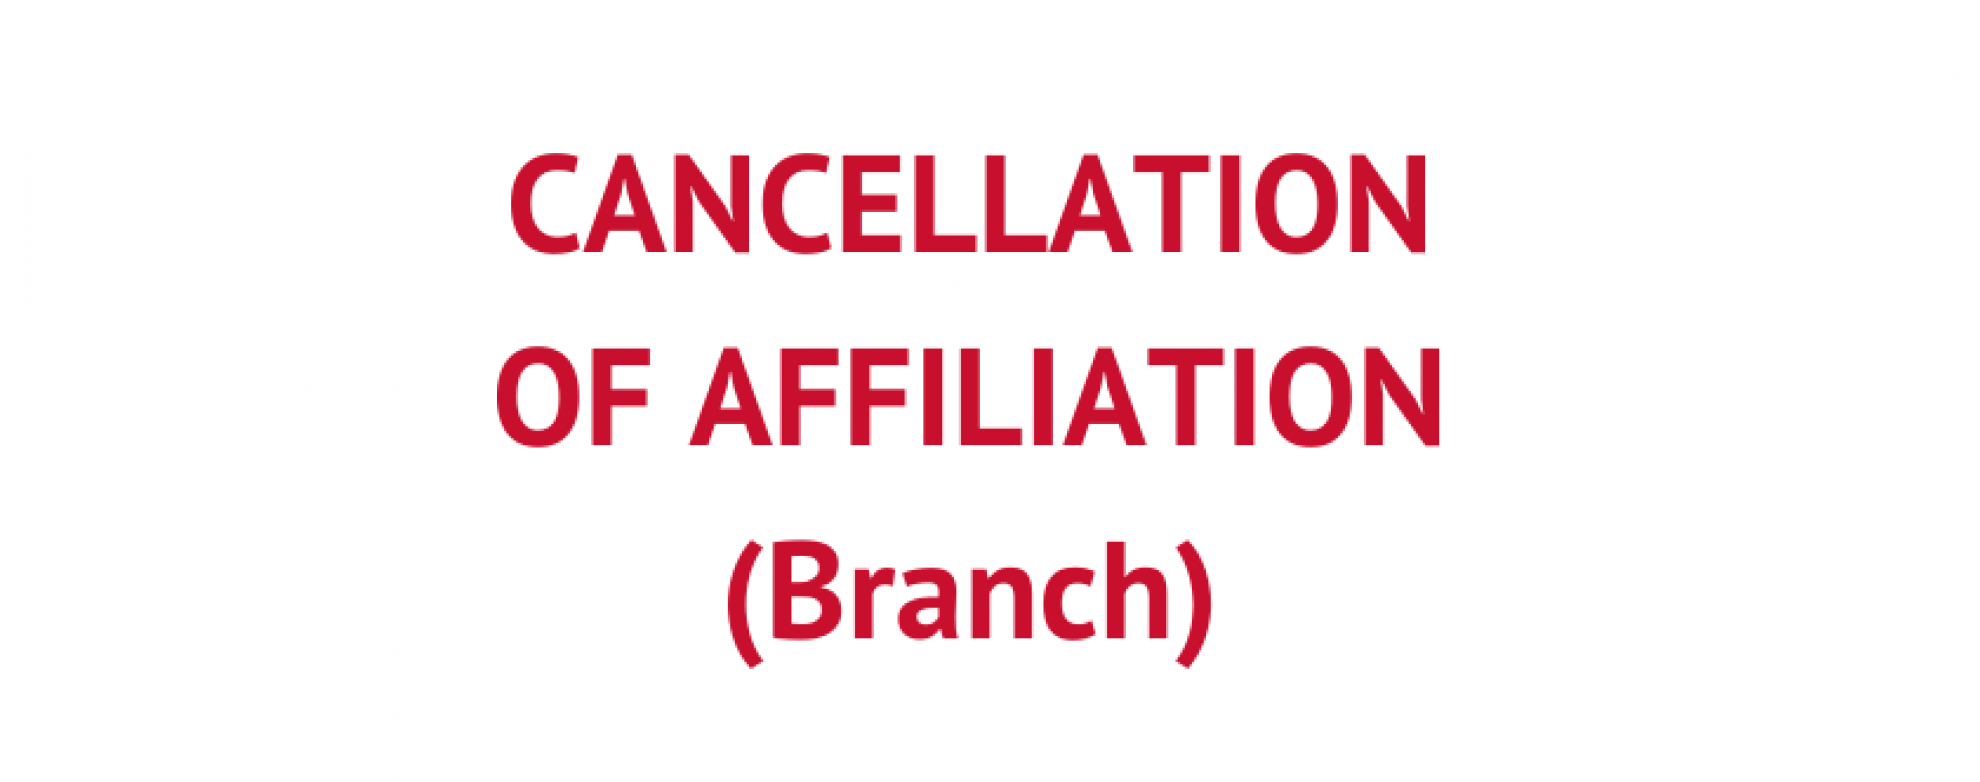 cancellation-of-affiliation-branch-clover-international-maracaibo-venezuela-fidi